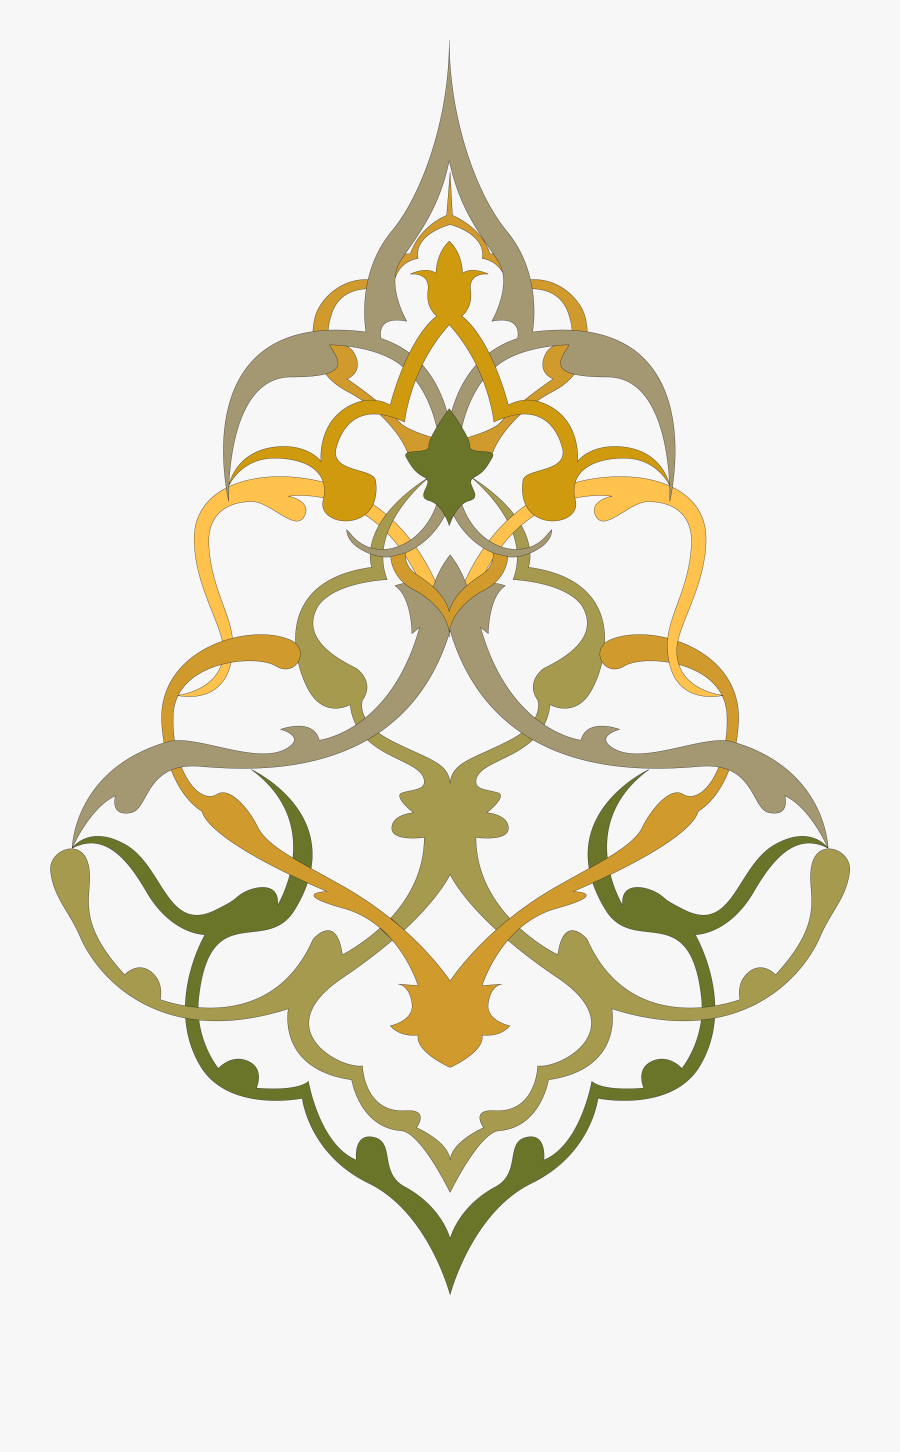 Islamic Geometric Ornament Art Patterns Hd Image Free - Ornament Islamic Png, Transparent Clipart